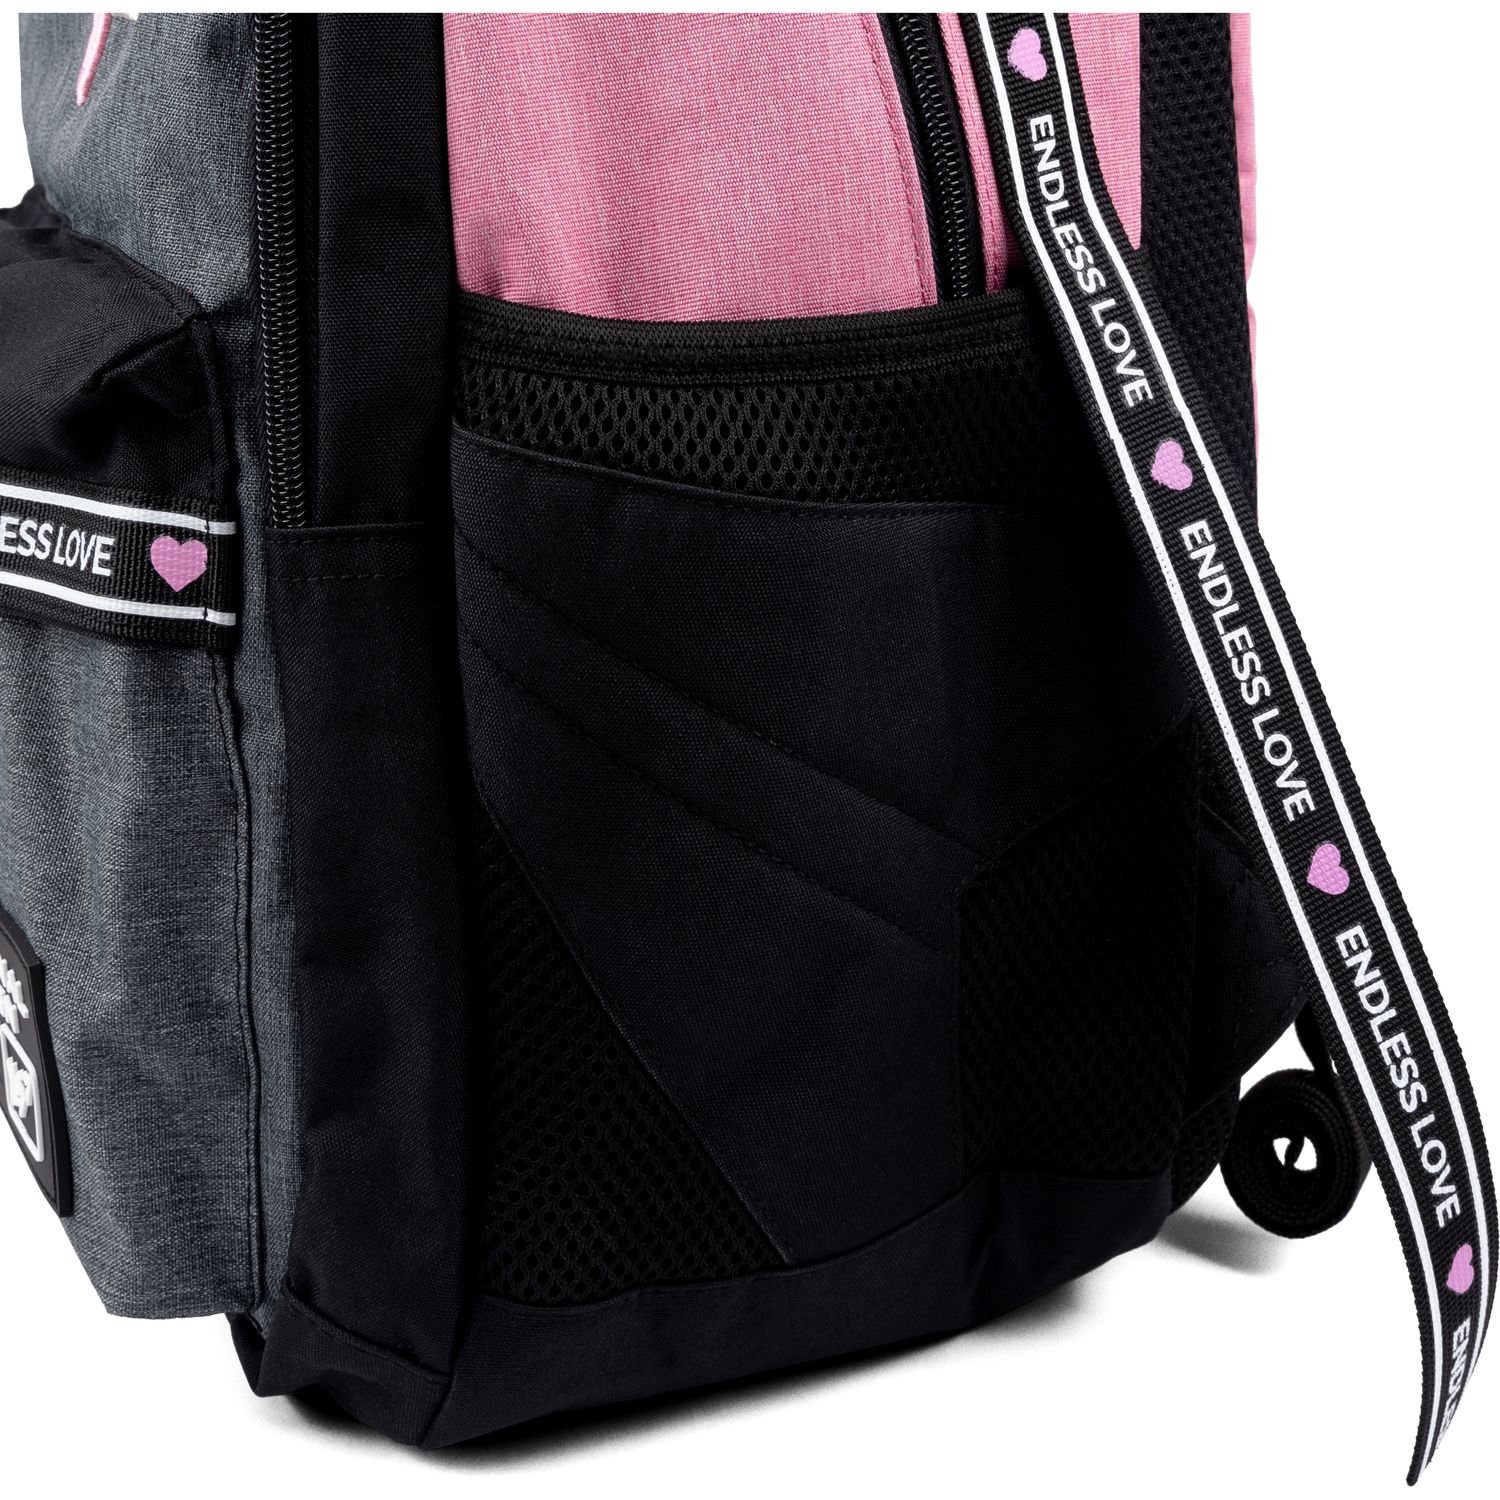 Рюкзак Yes TS-61 Girl Wonderful, черный с розовым (558908) - фото 6